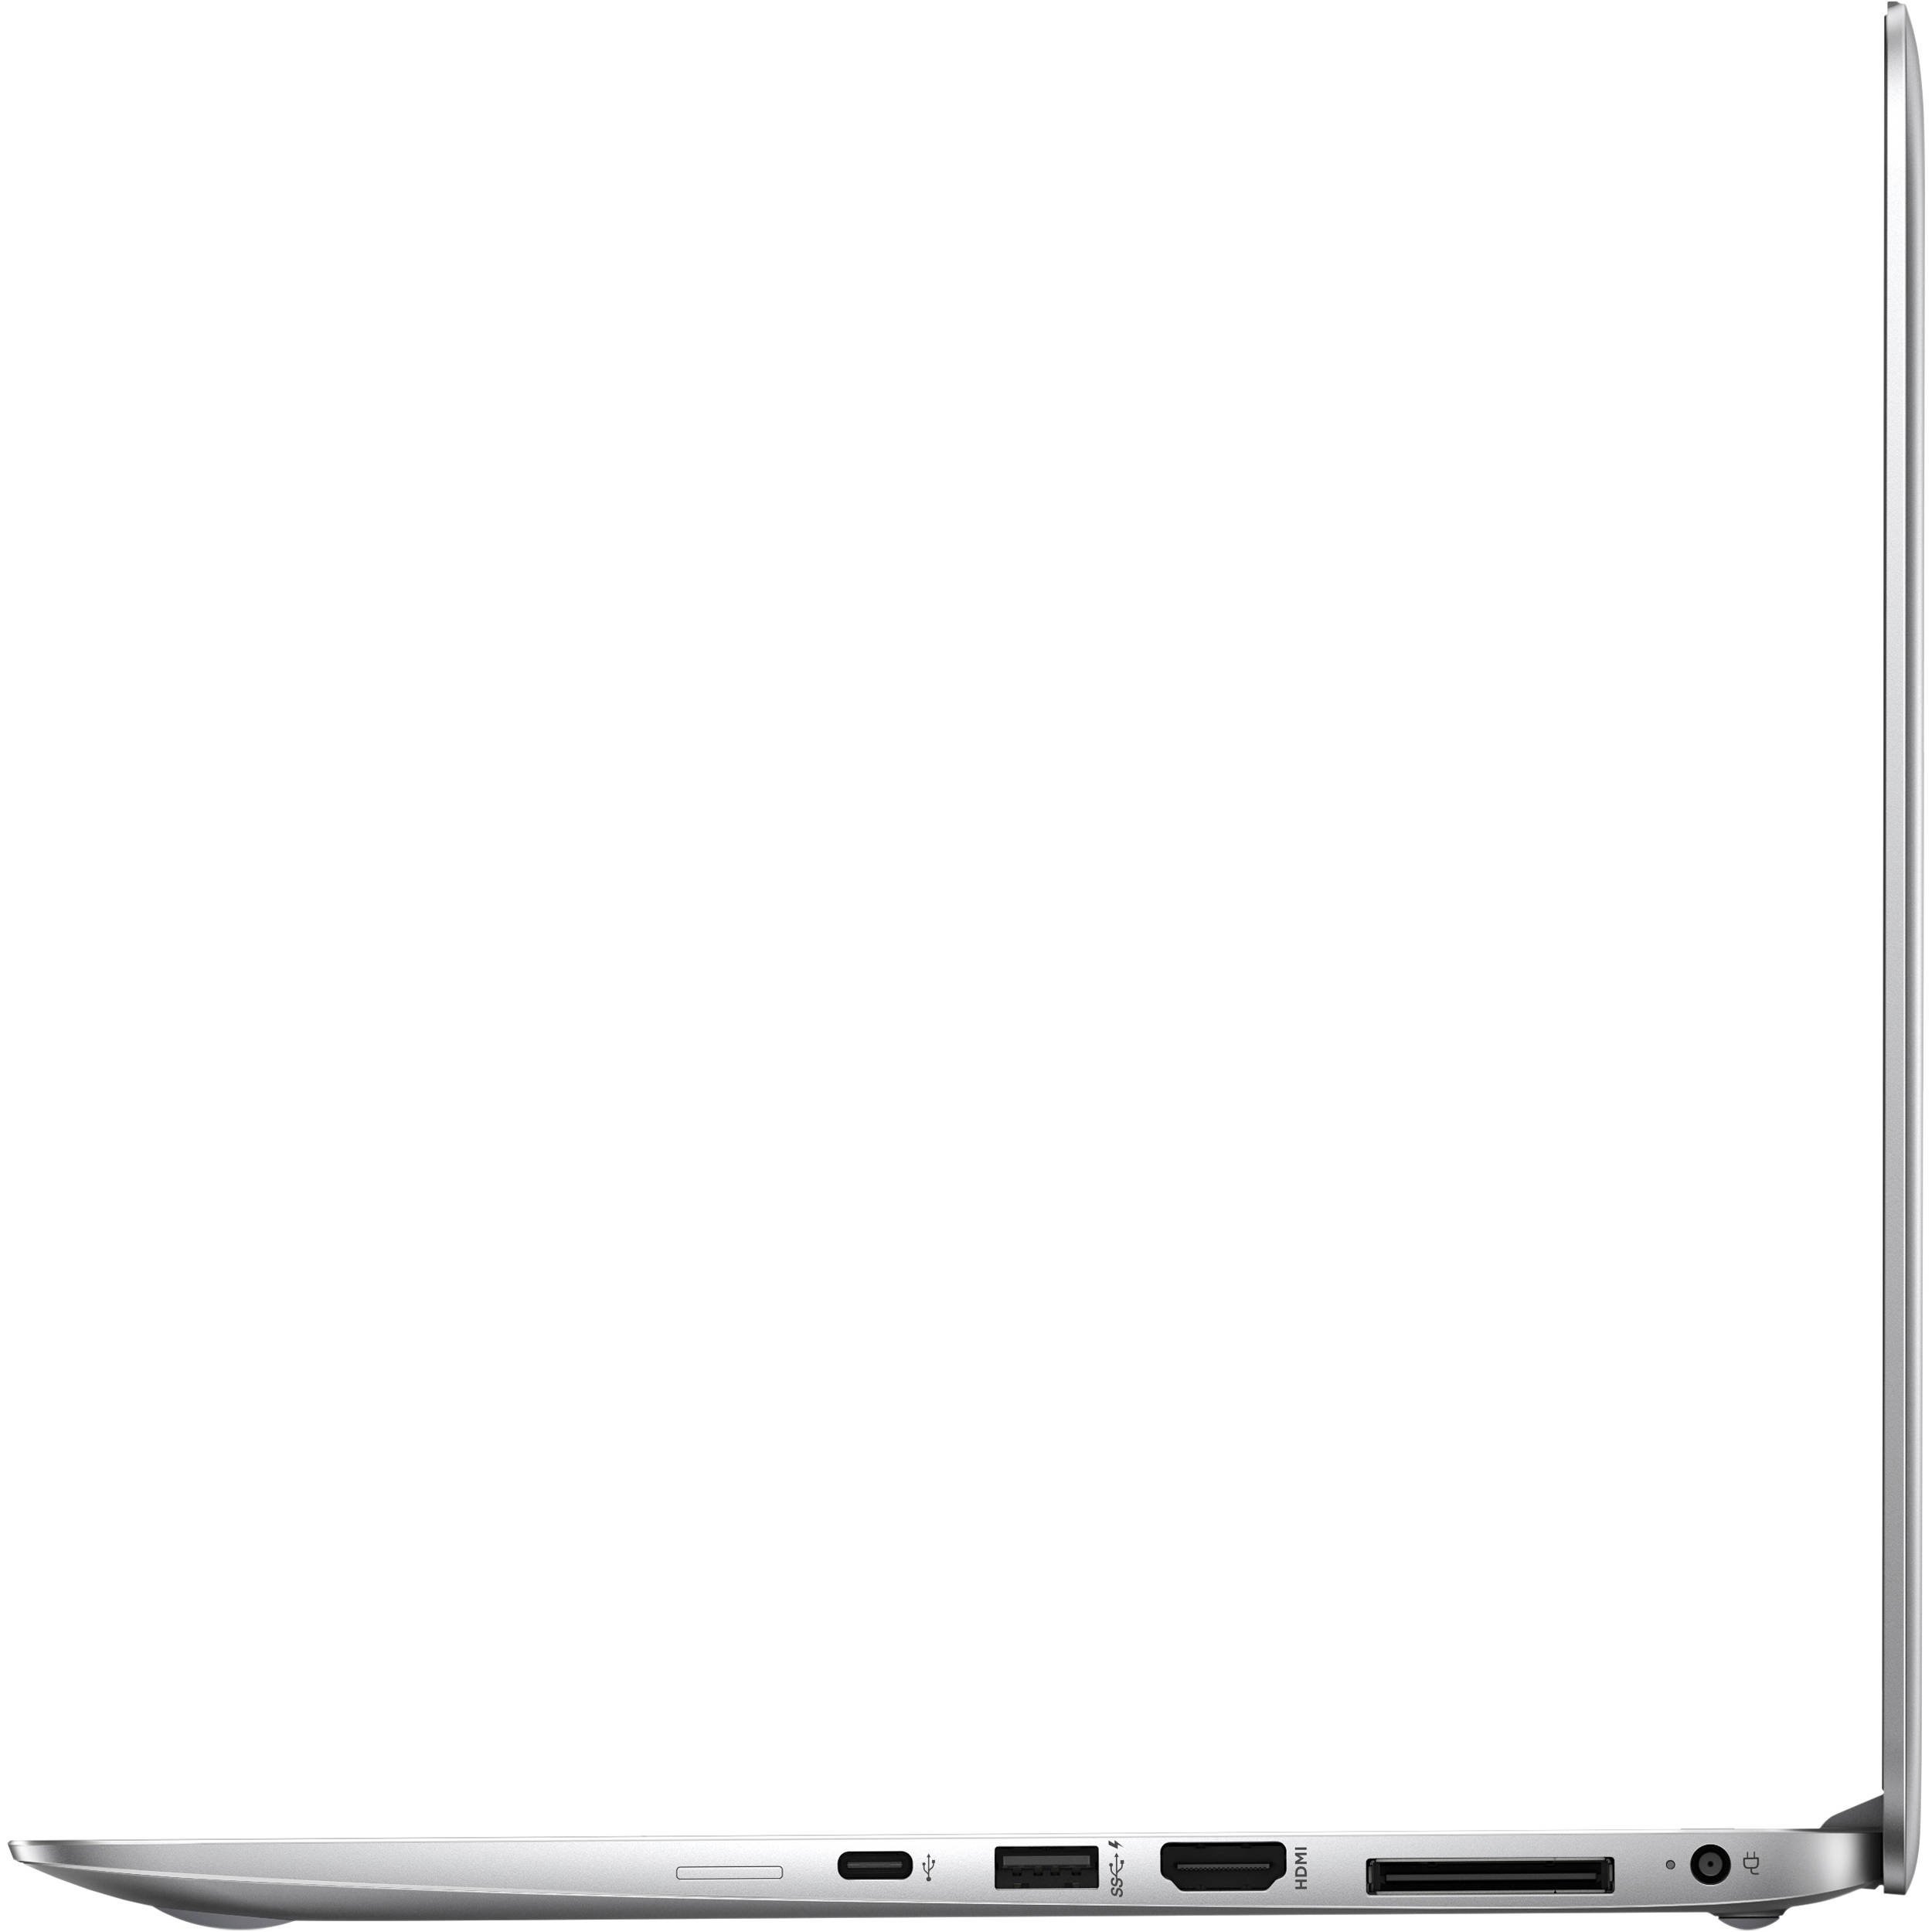  Ноутбук HP EliteBook 1040 G3 (Y8R05EA) фото8